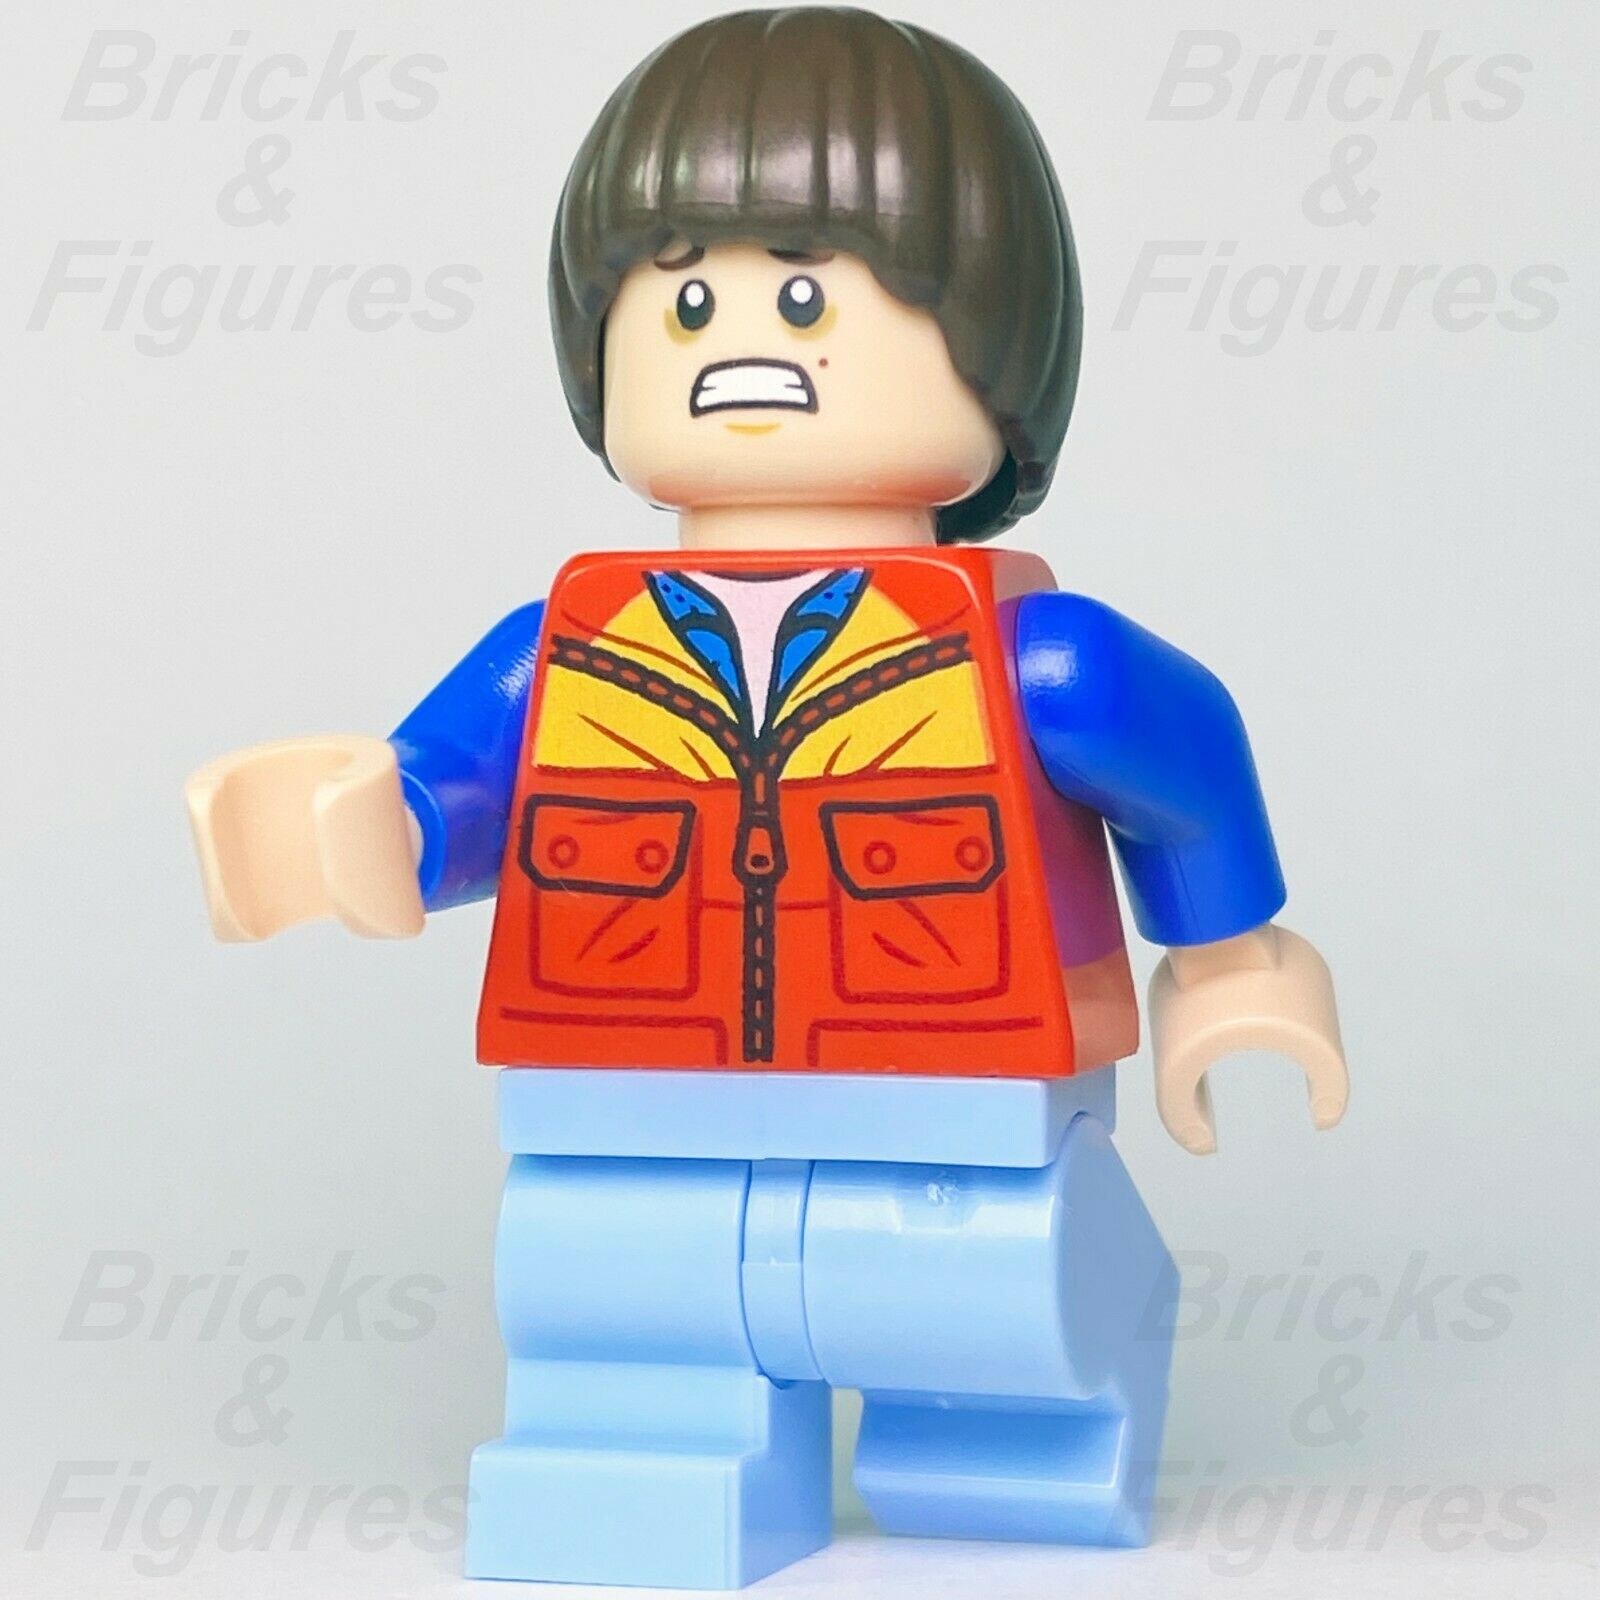 New Stranger Things LEGO Will Byers Netflix TV Series Minifigure from set 75810 - Bricks & Figures